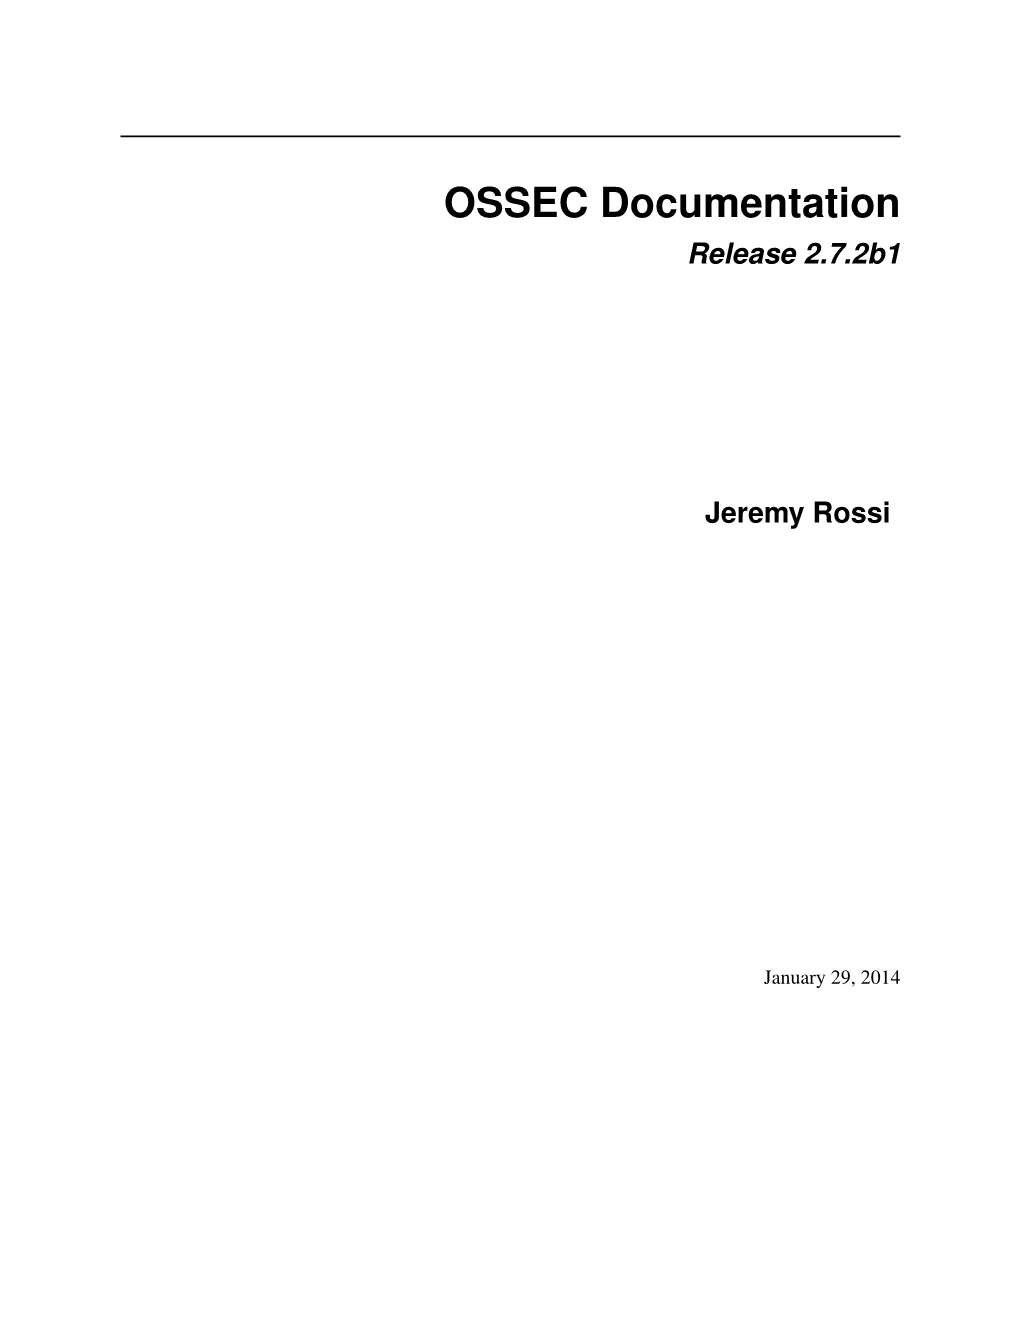 OSSEC Documentation Release 2.7.2B1